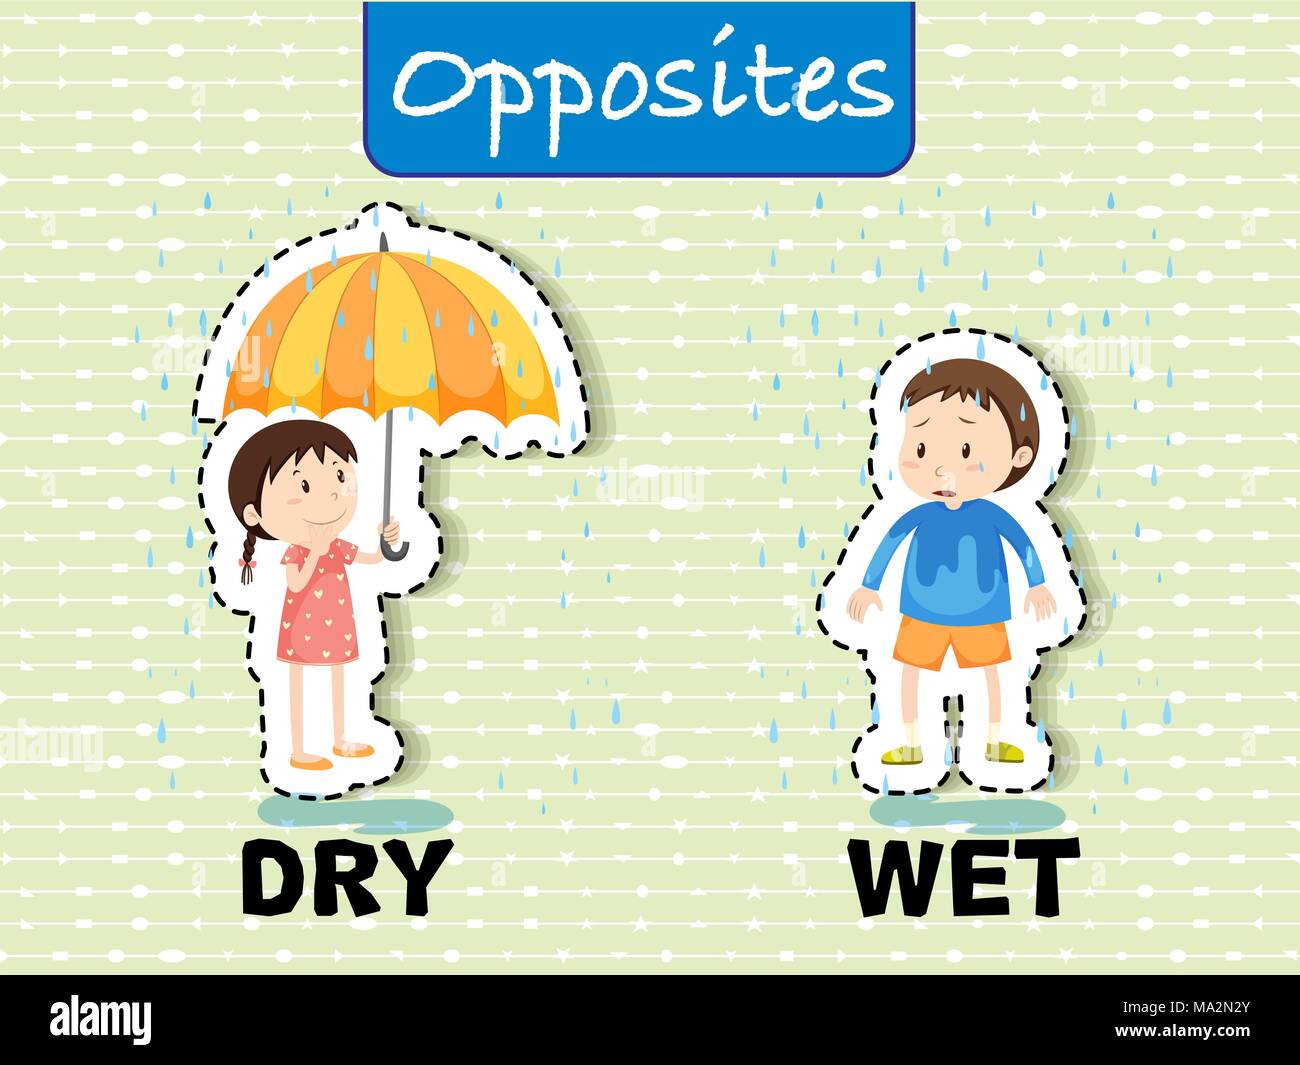 Opposite words for dry and wet illustration Stock Vector